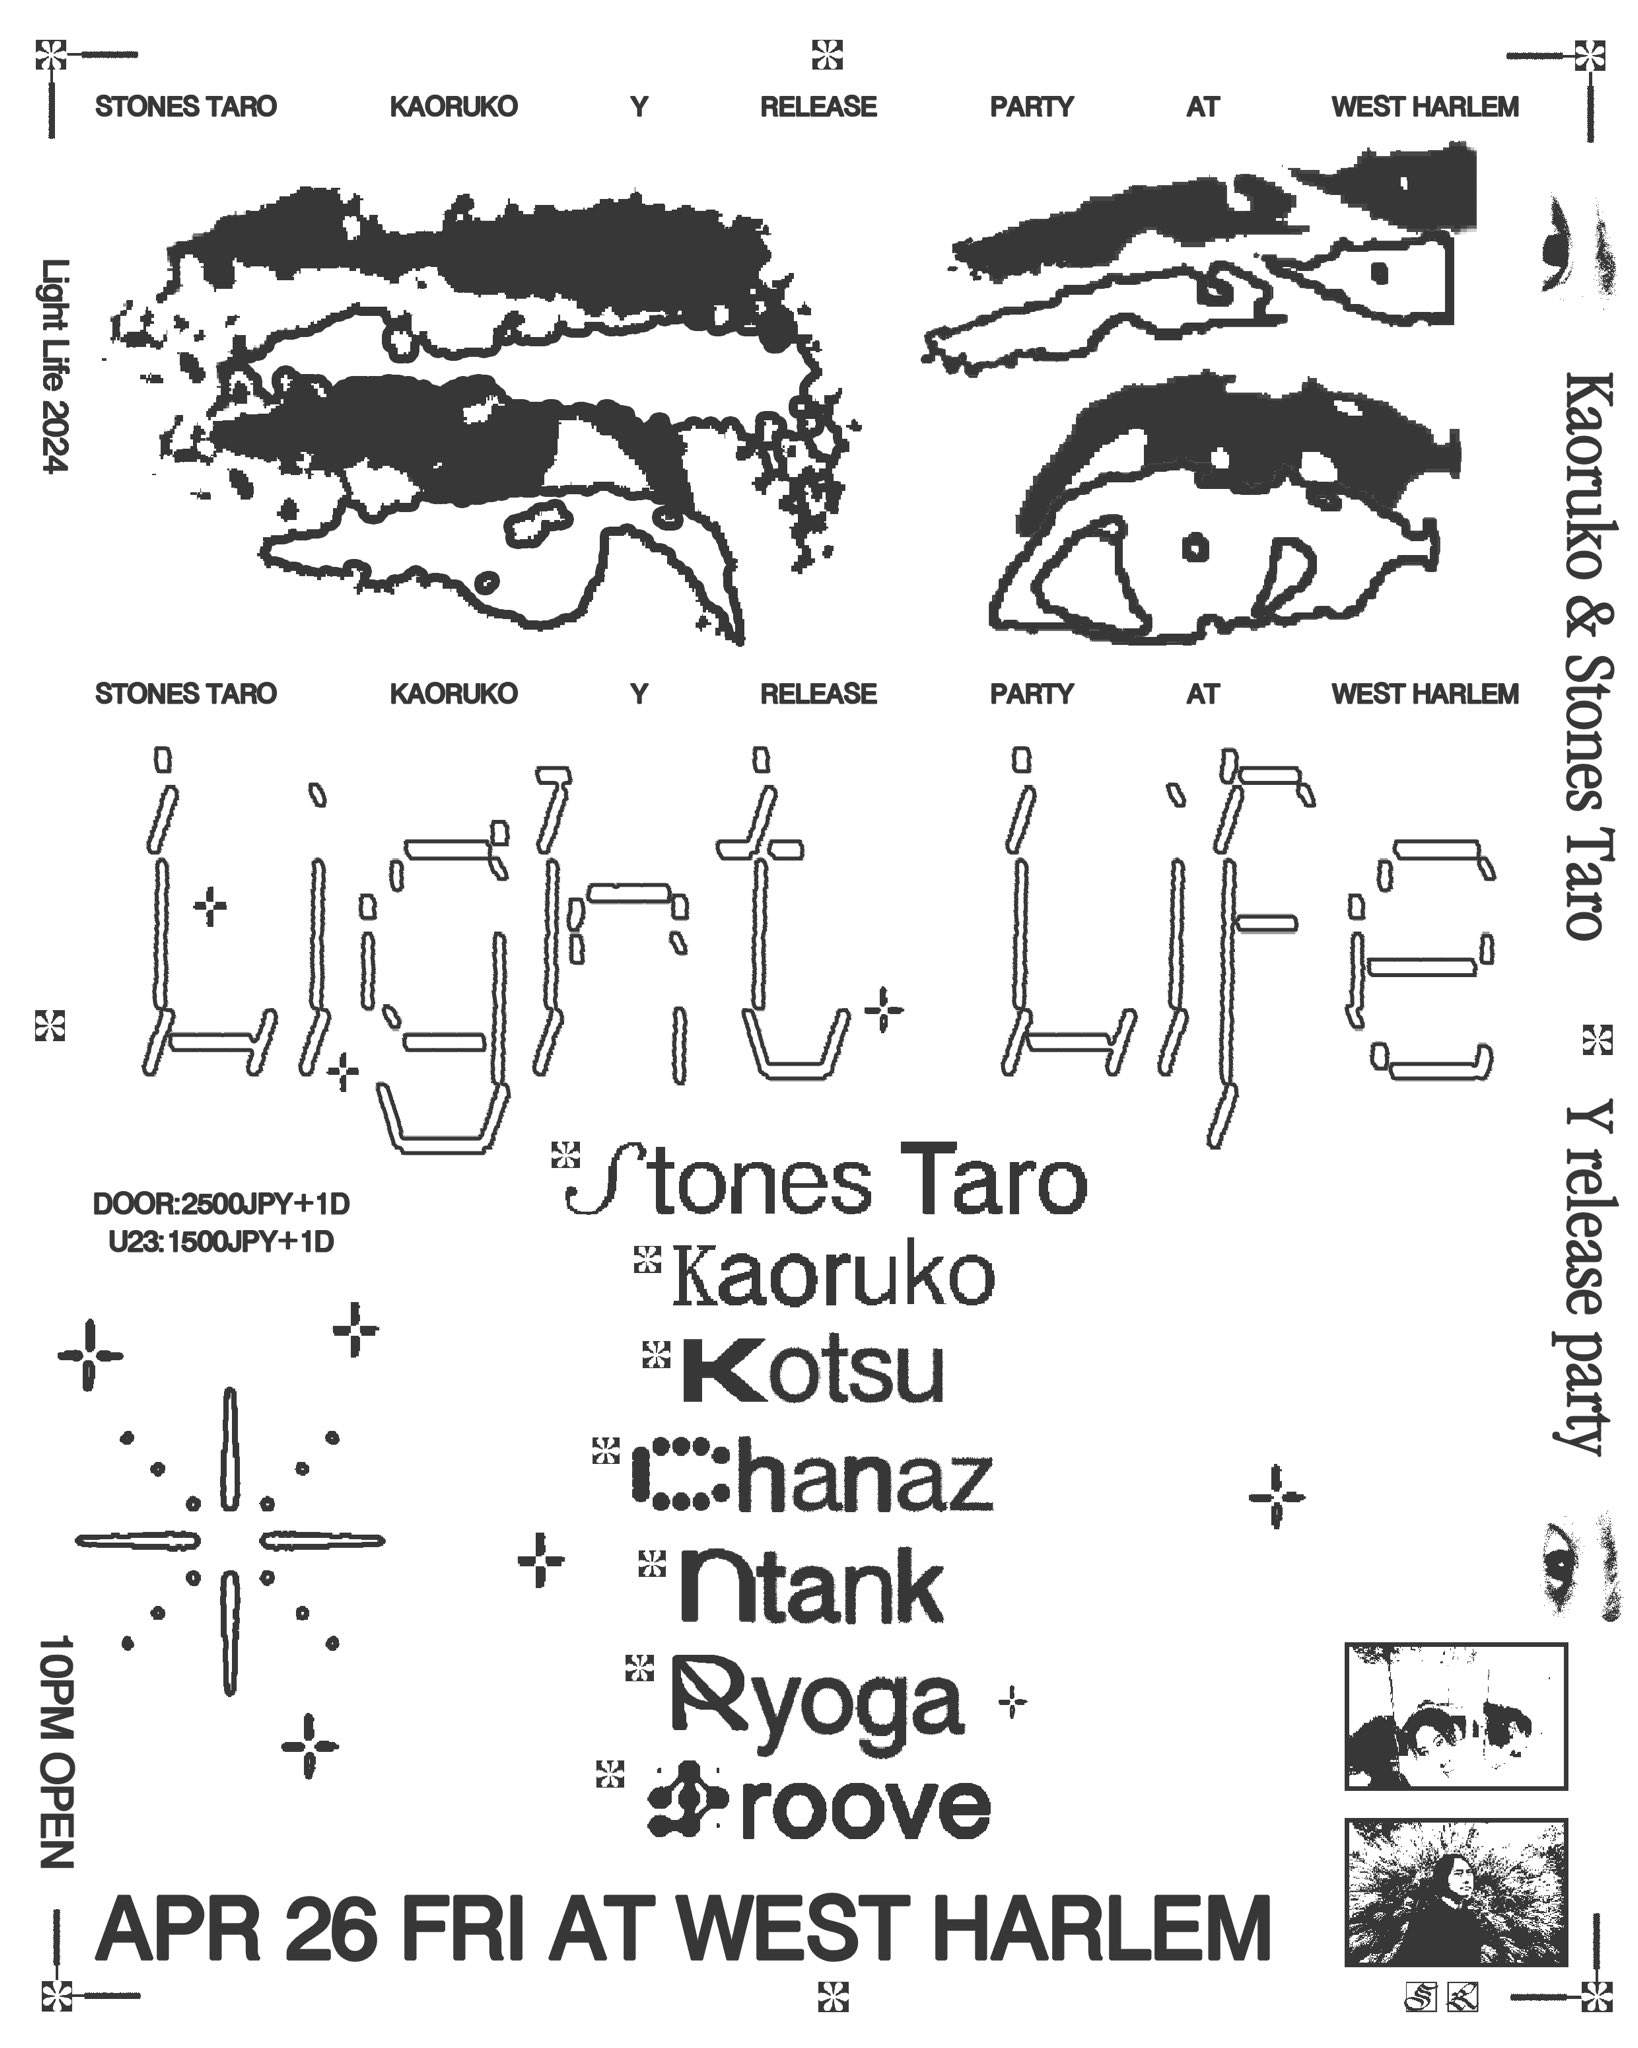 Light Life - Kaoruko&Stones Taro-Y Release Party - - フライヤー表